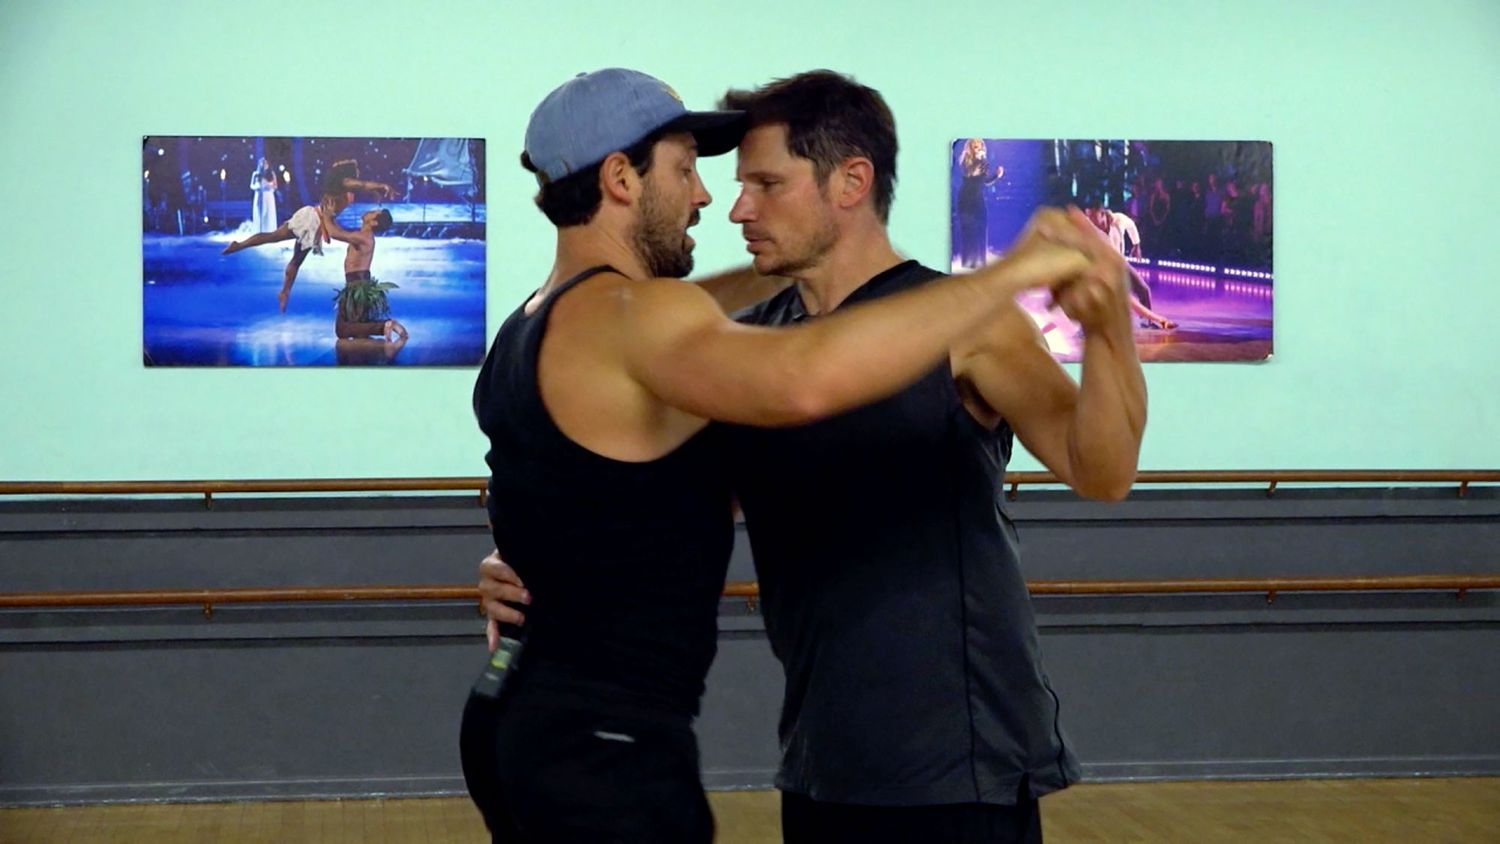 Nick Lachey and Maksim Chmerkovskiy dancing together.Credit: ABC